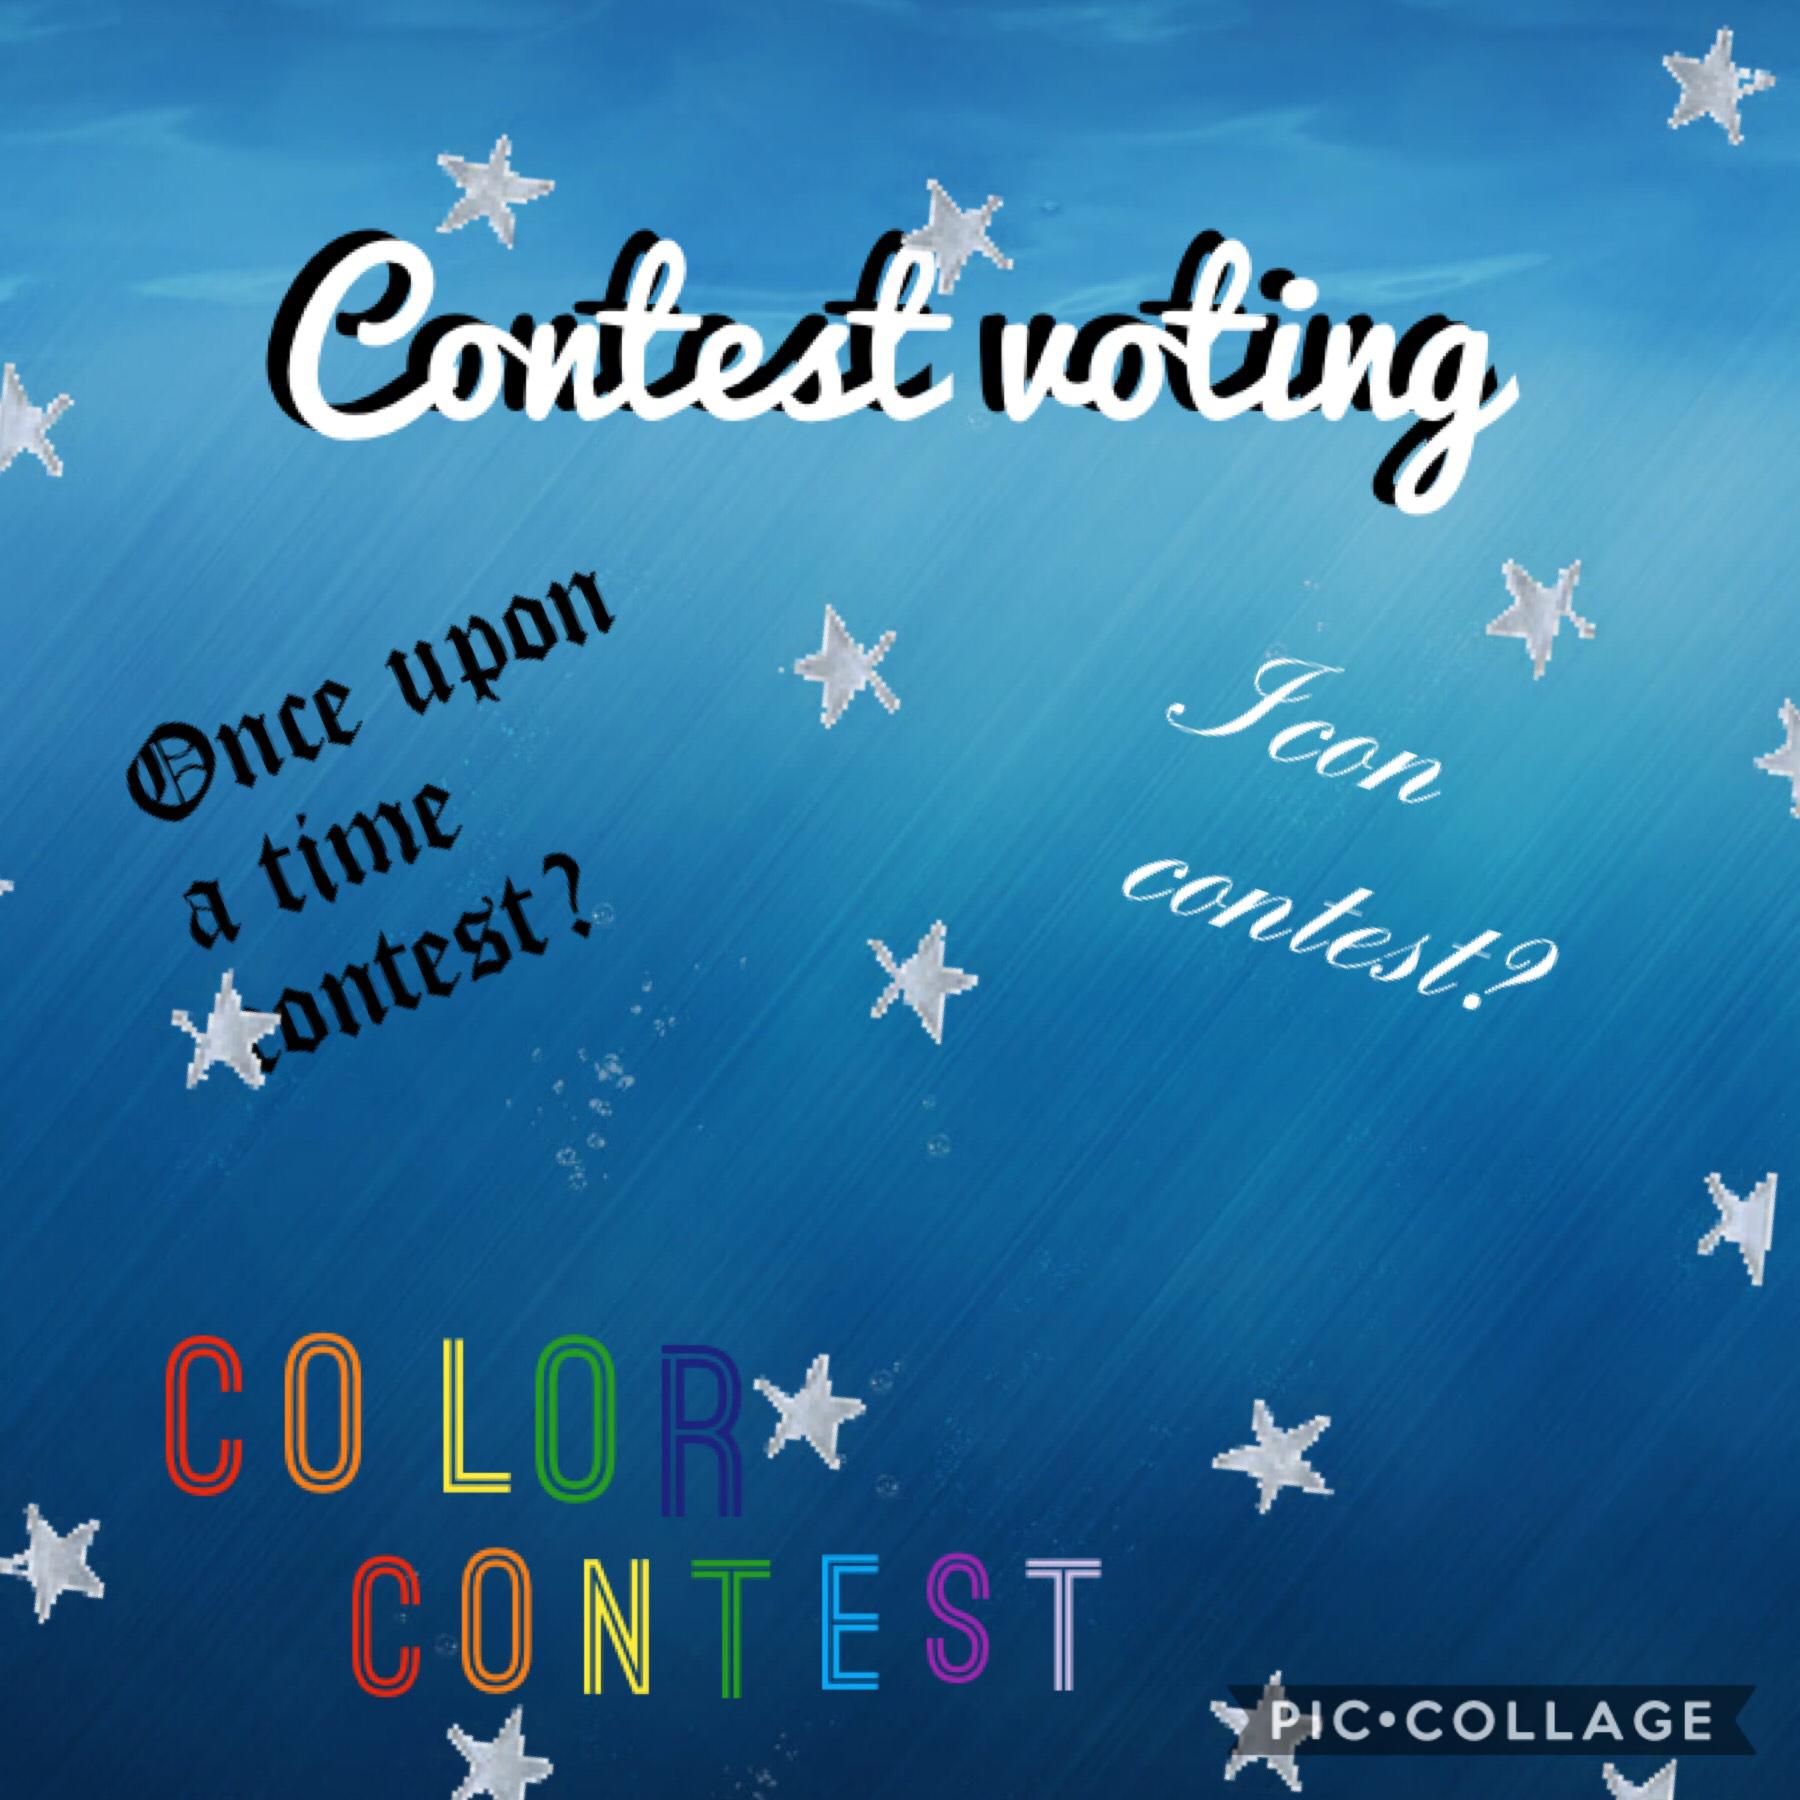 ❔tap❔

Help me decide what contest I should do next 🤔